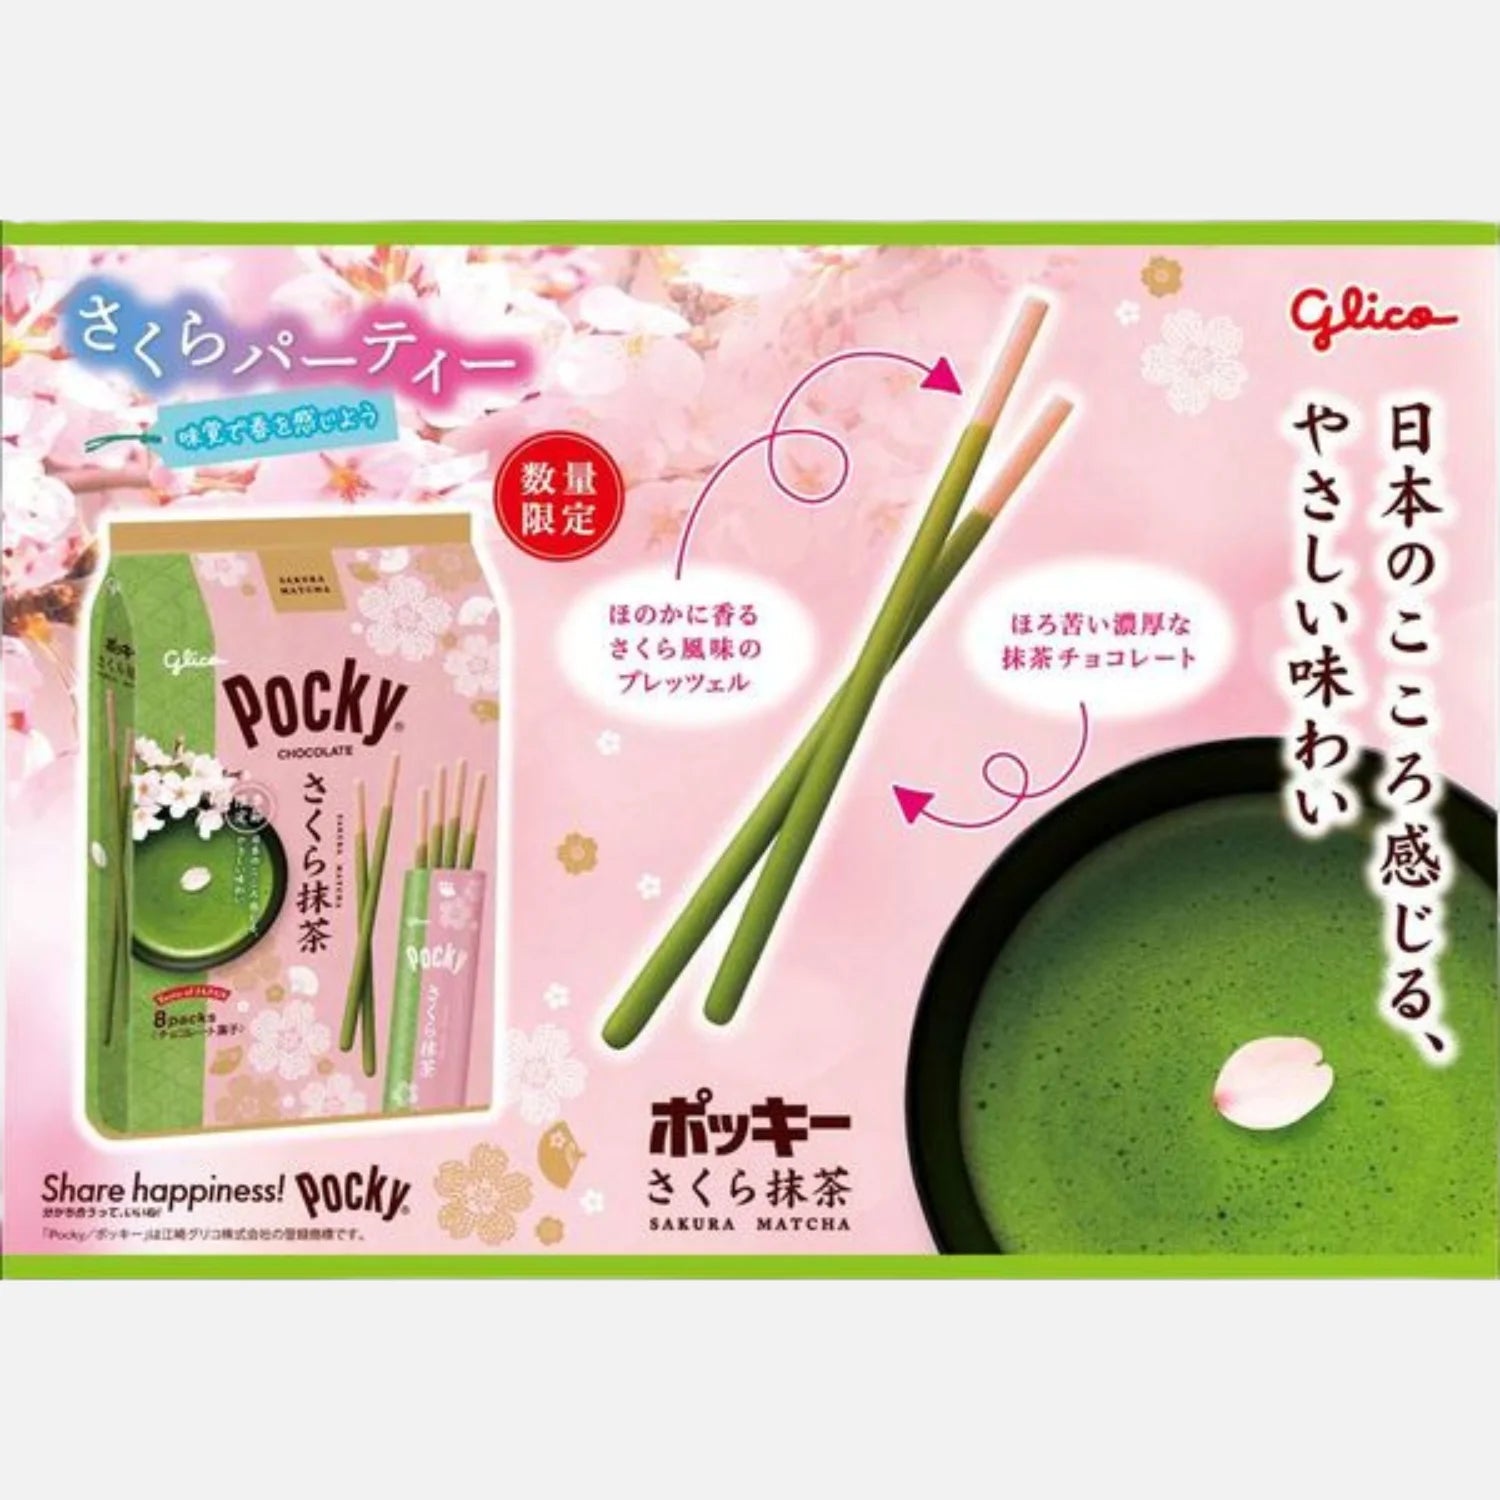 Glico Pocky Sakura Matcha Limited Chocolate Sticks (8 Packs Inside) - Buy Me Japan